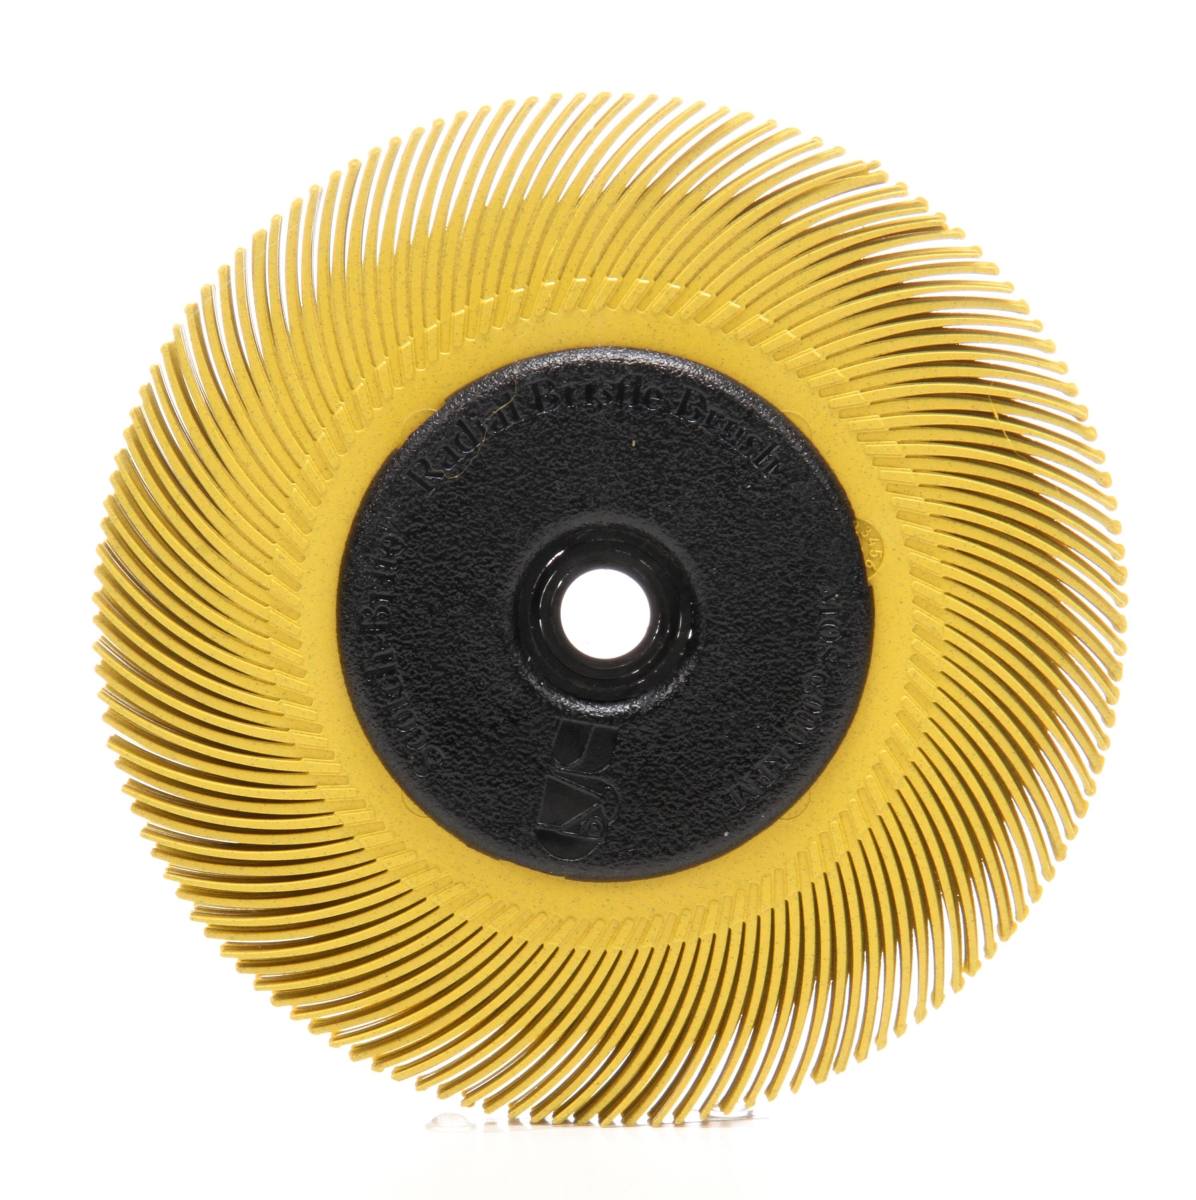 3M Scotch-Brite radiale borstelschijf BB-ZB met flens, geel, 152,4 mm, P80, type C #33215